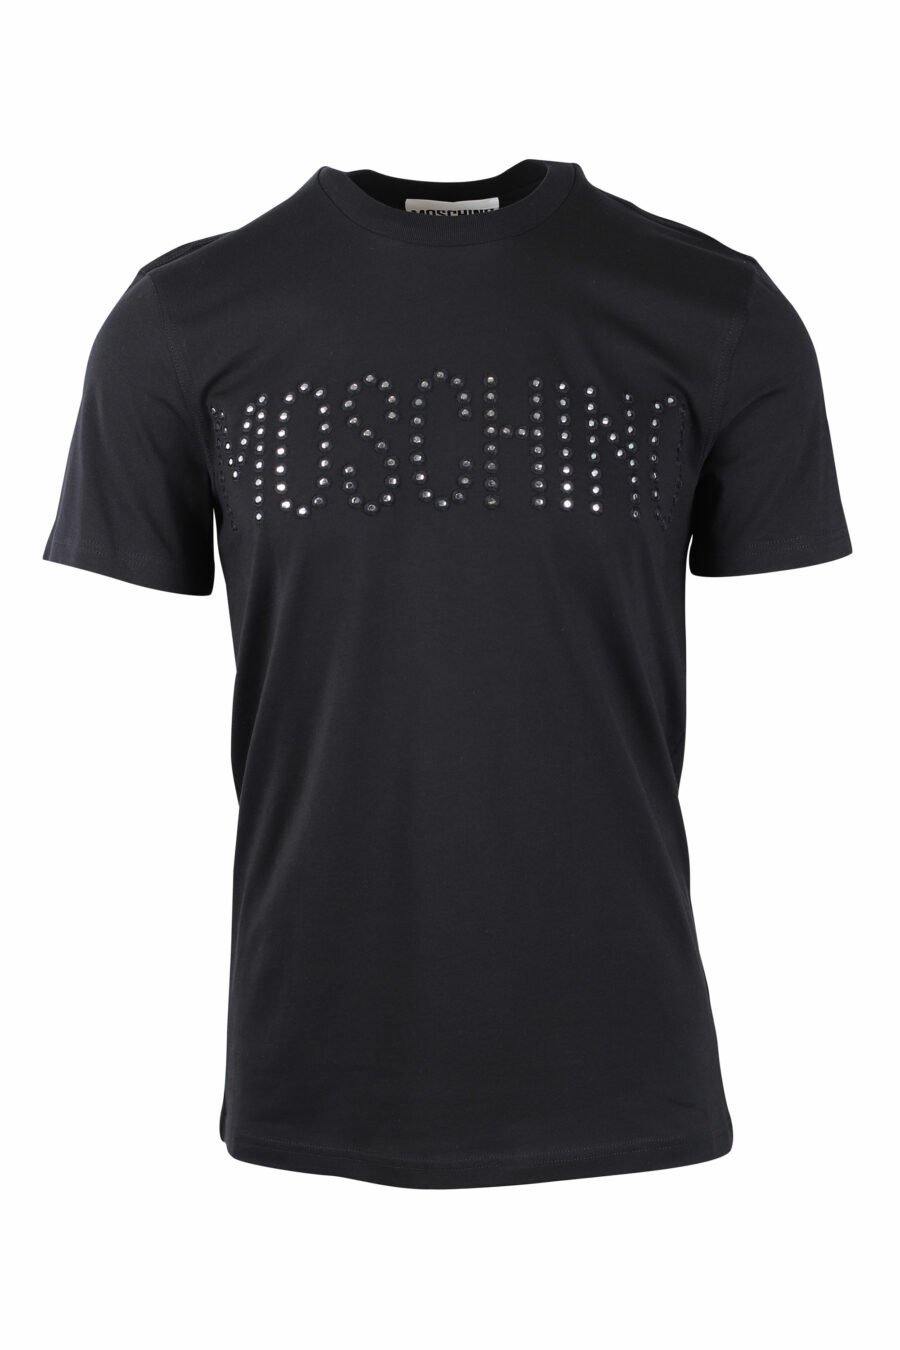 Schwarzes T-Shirt mit silbernem Maxilogo - IMG 1467